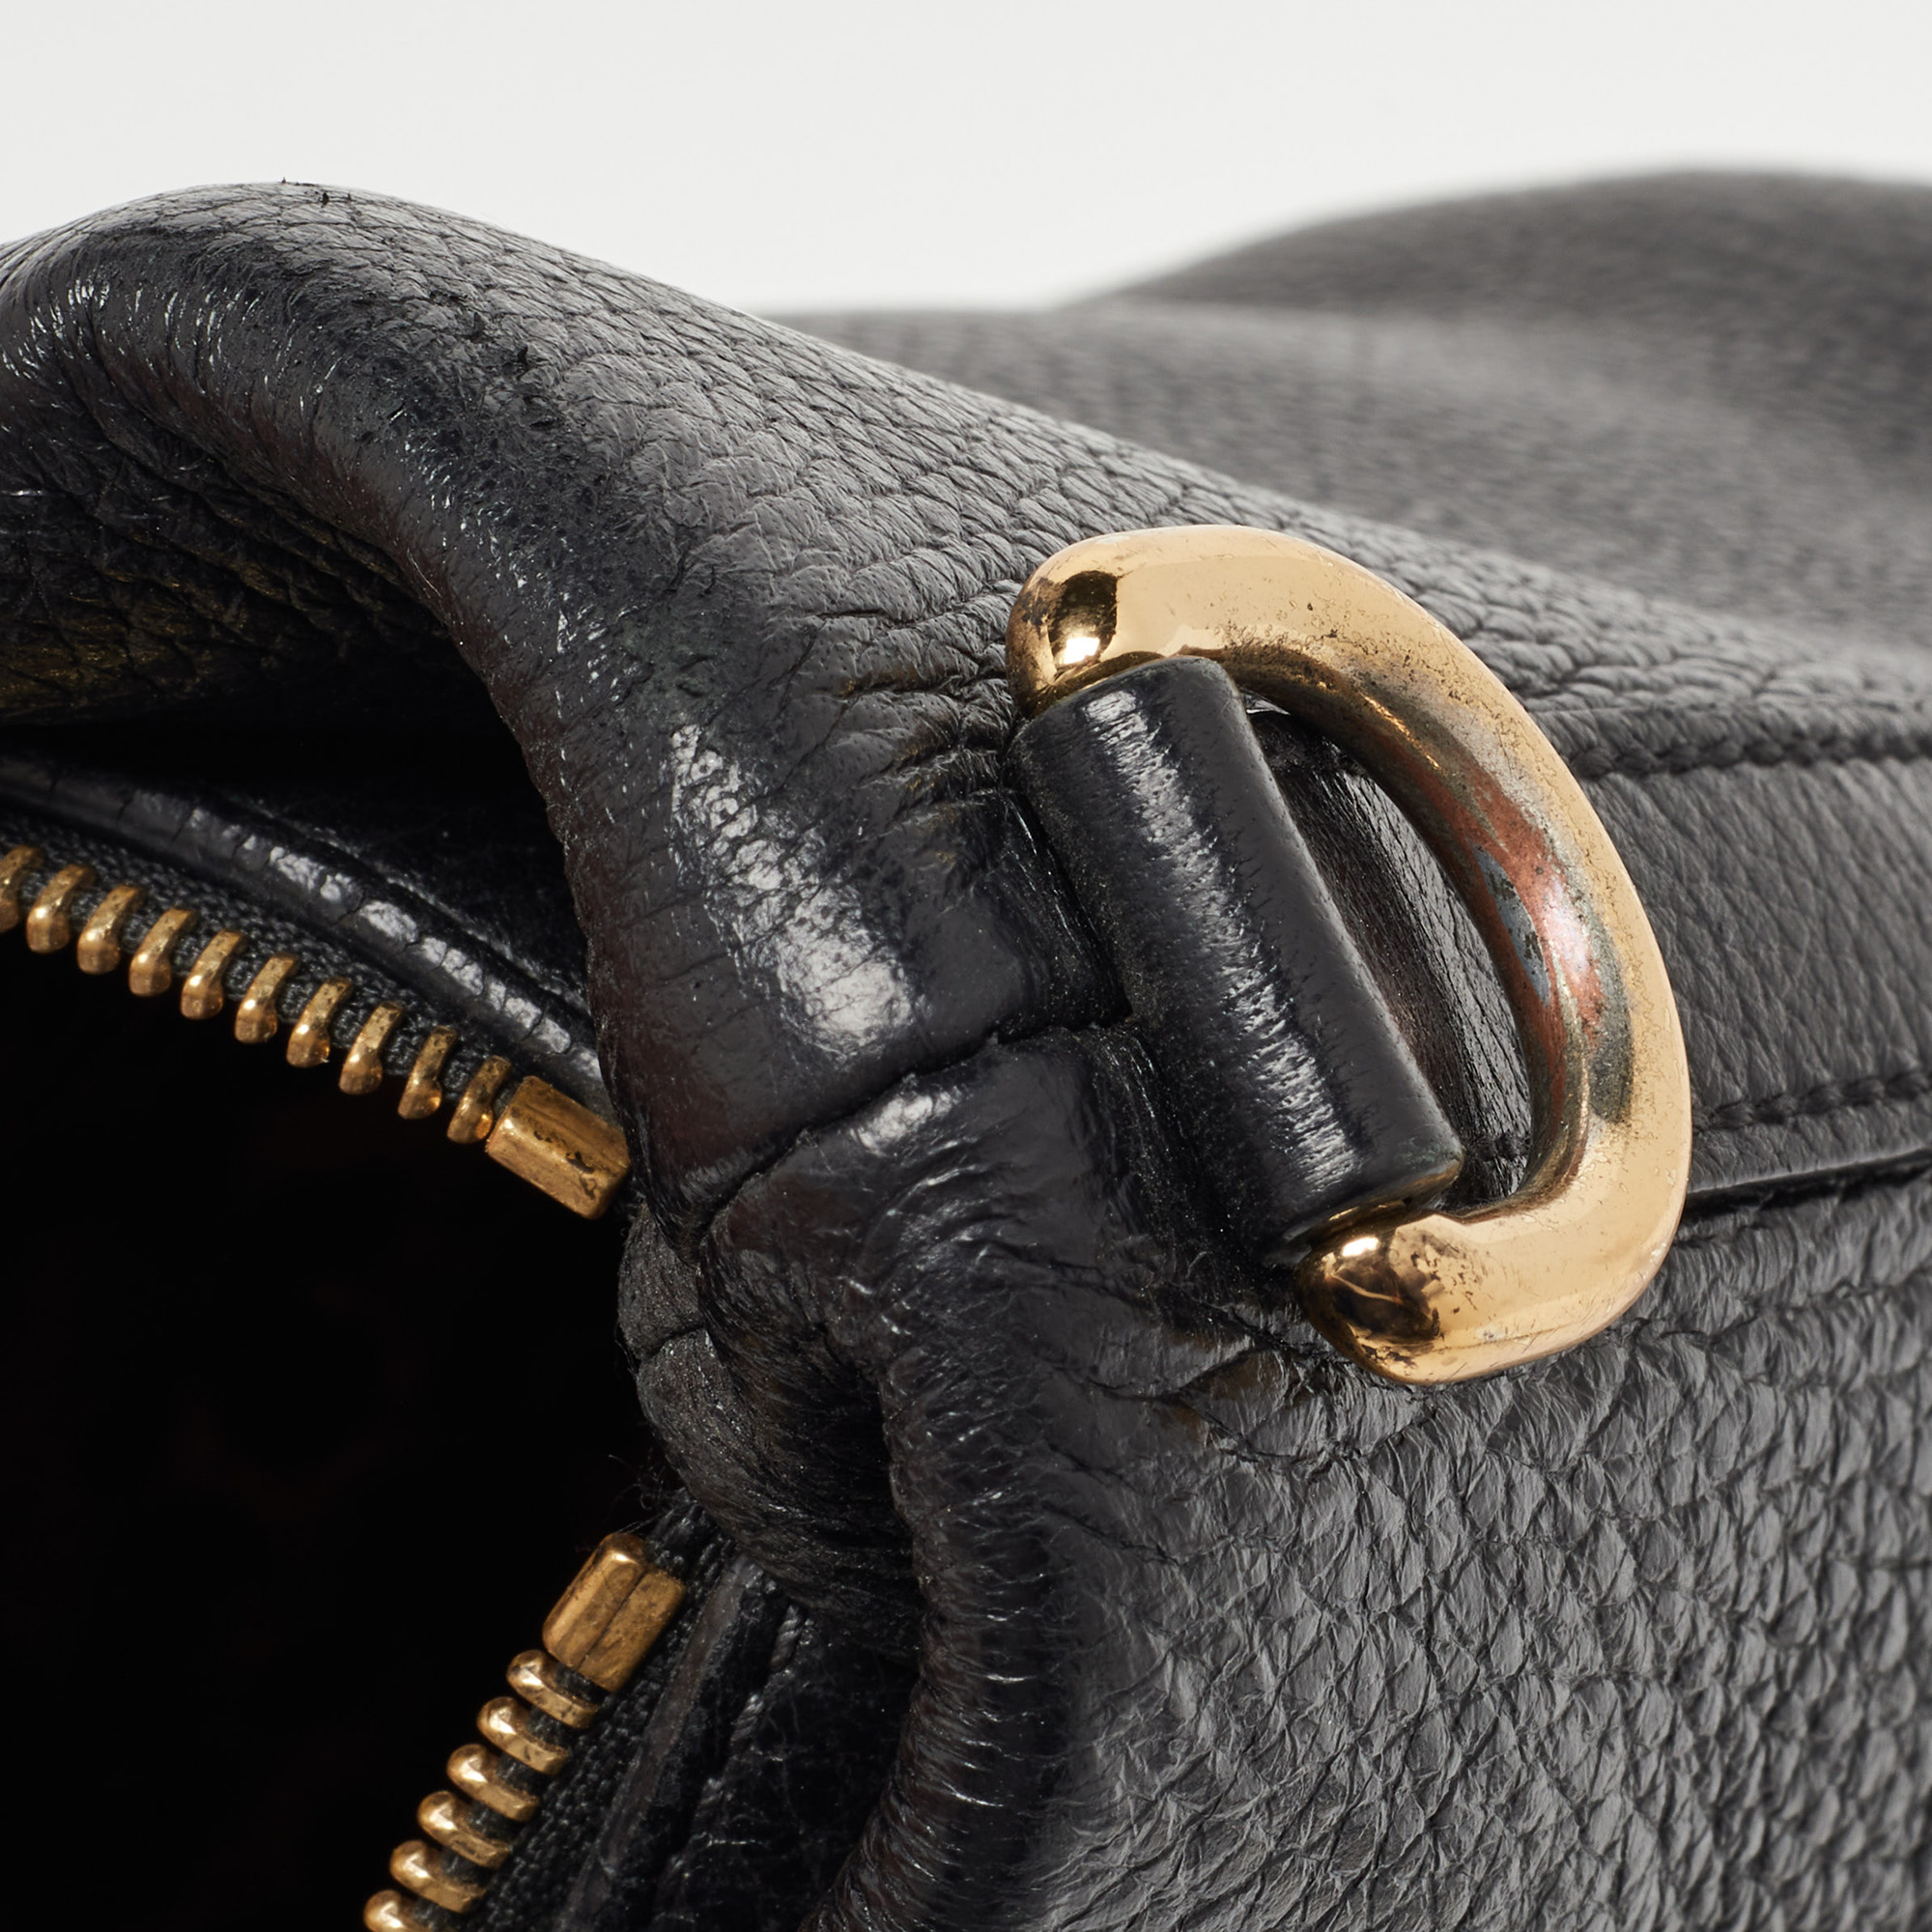 Dolce & Gabbana Black Soft Leather Bucket Bag